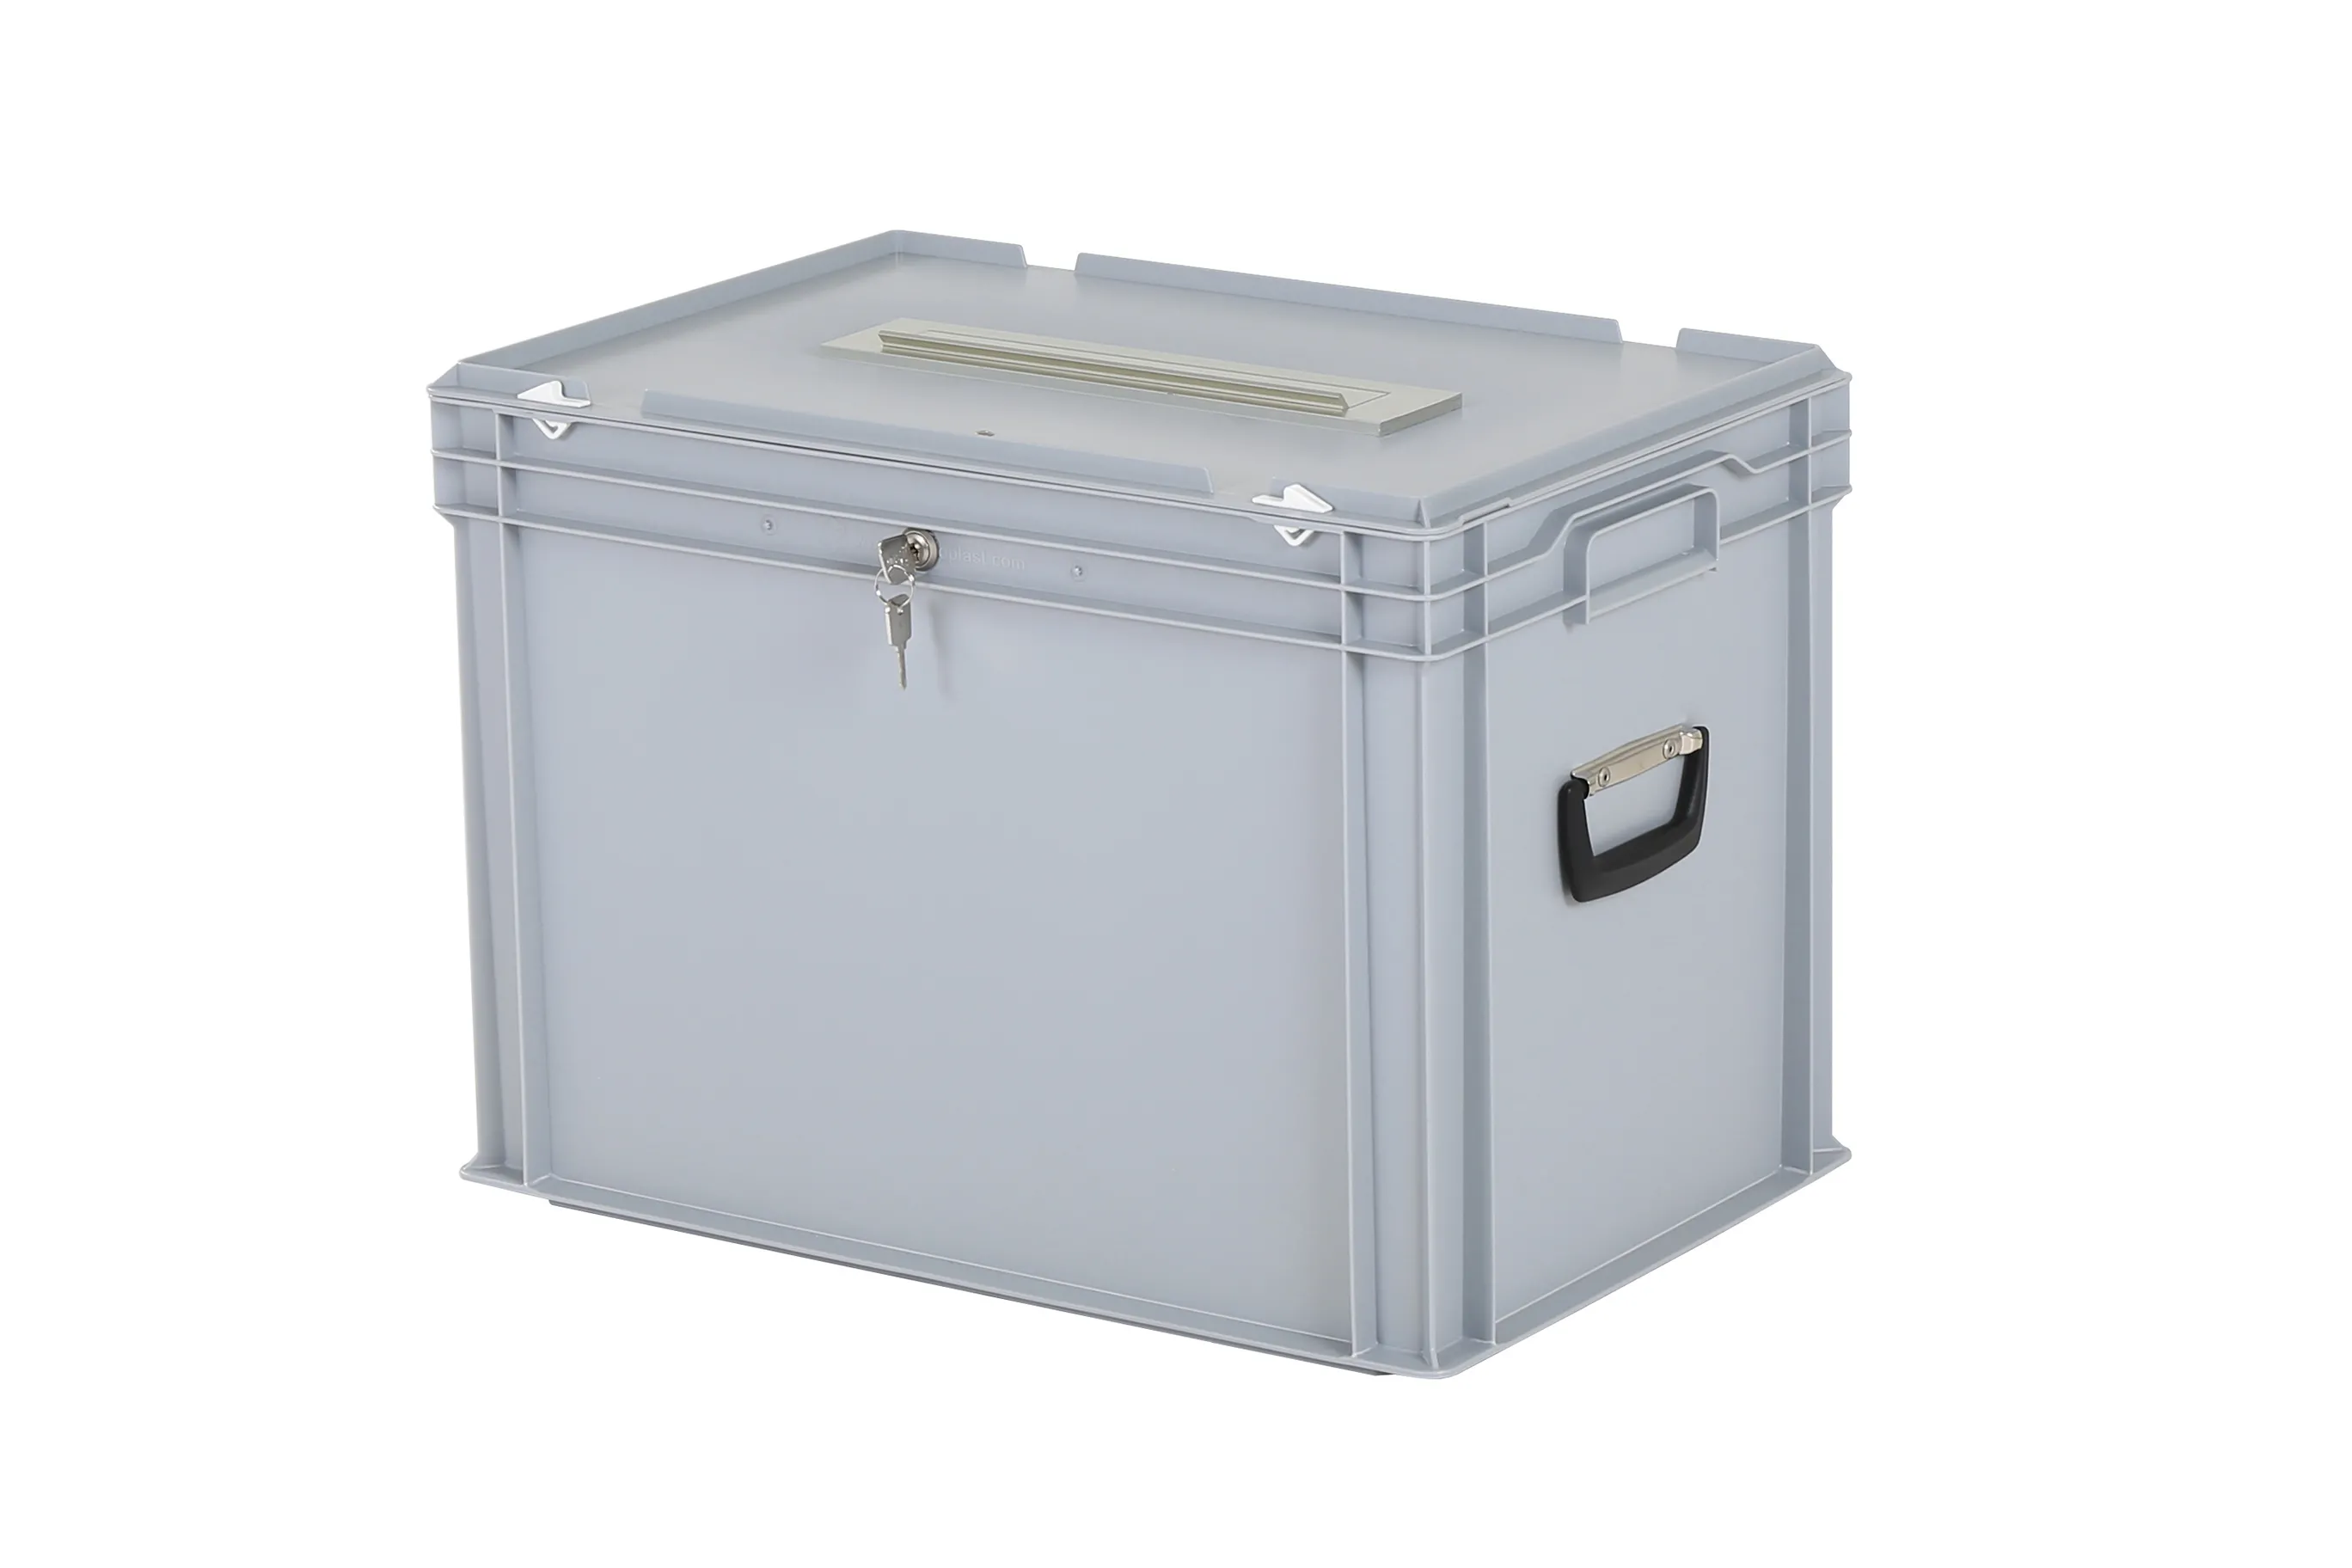 Ballot box | Transport box with mailbox flap and lock - 600 x 400 x H 439 mm - grey | Keyed alike cylinder lock 